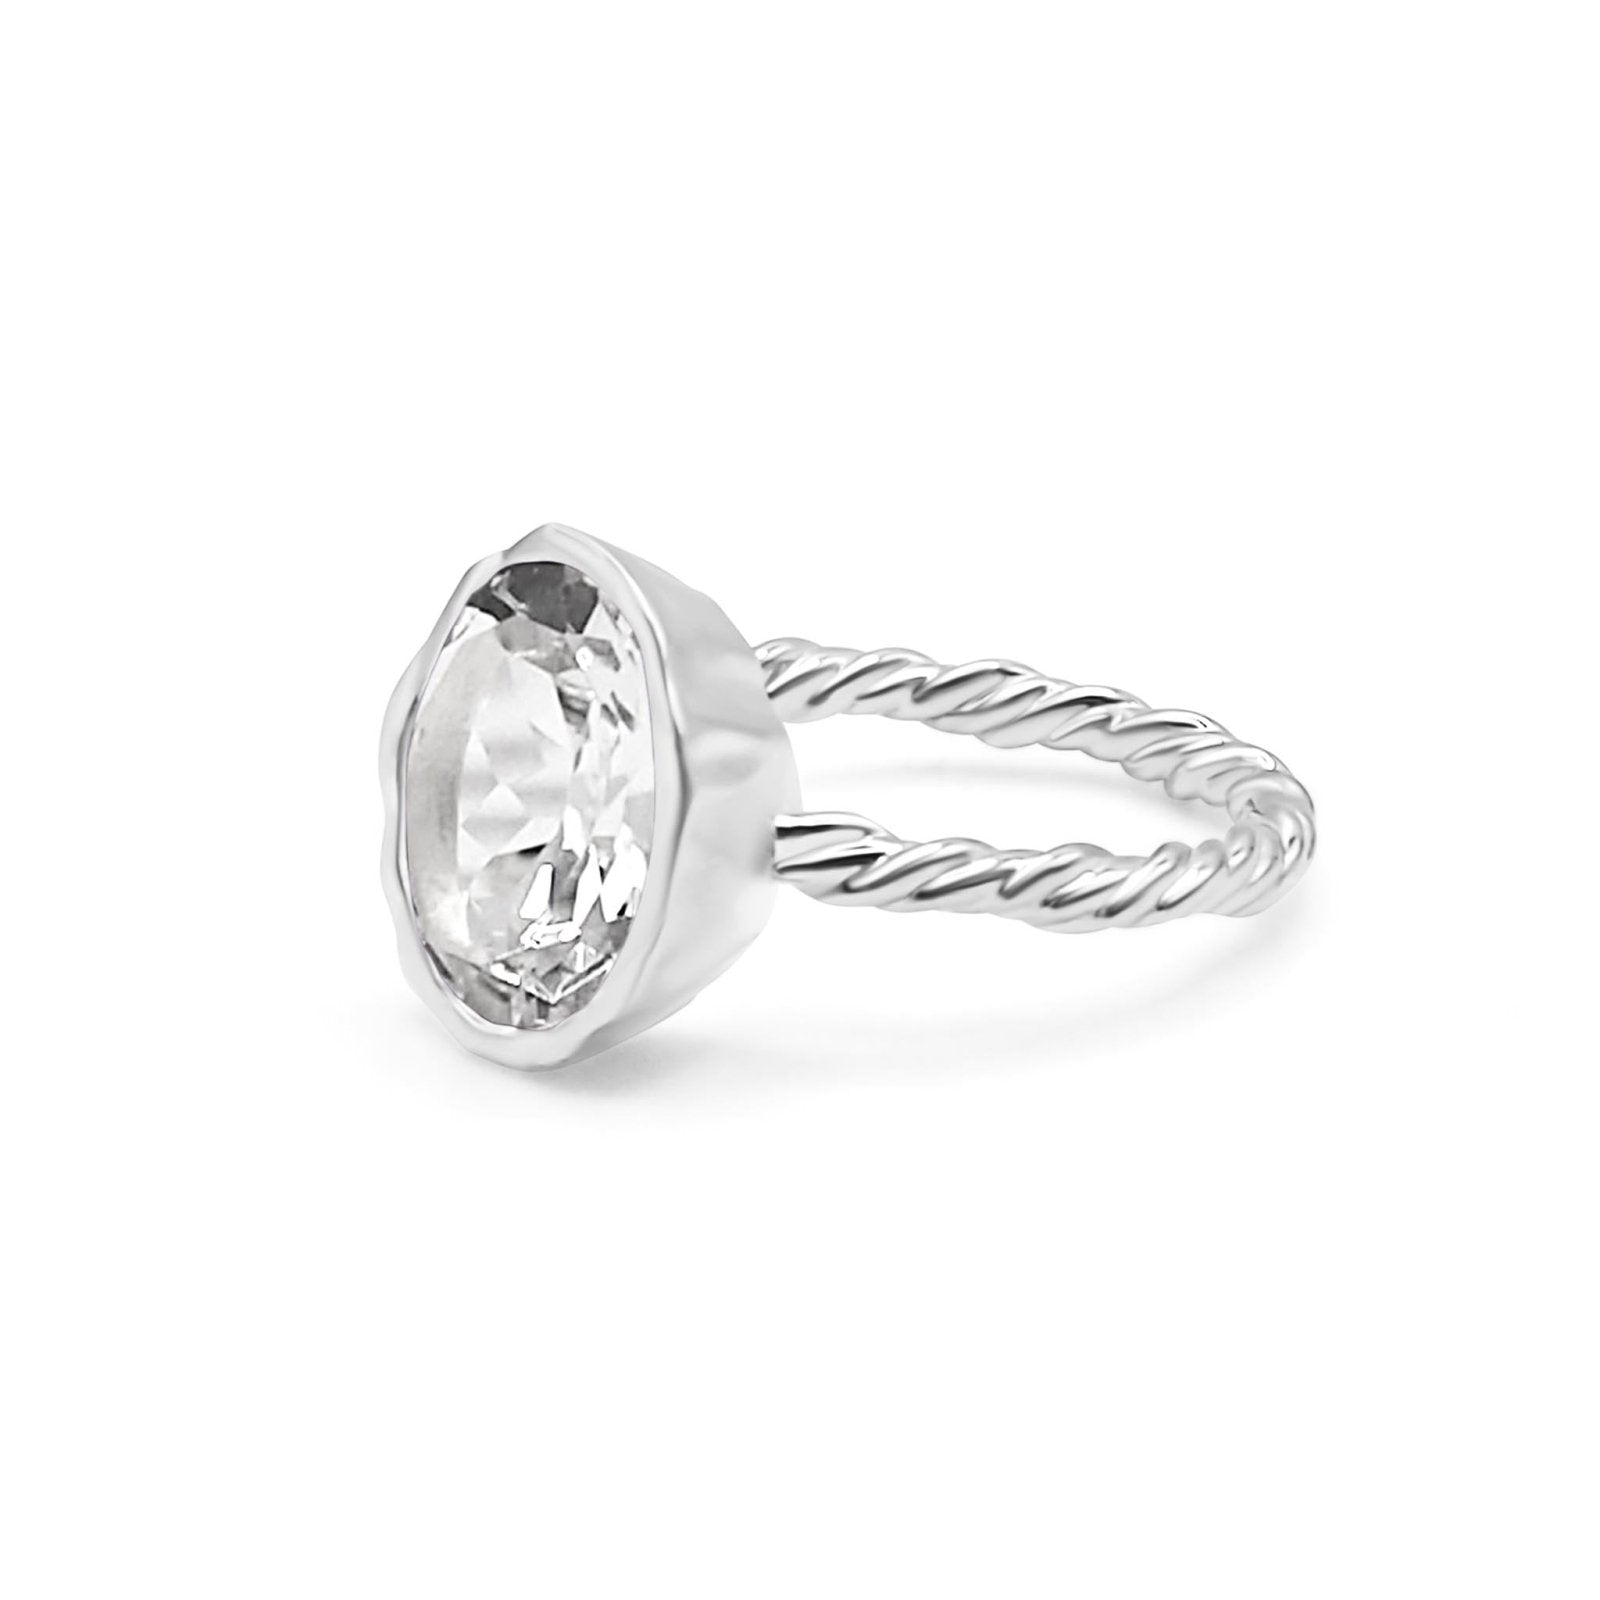 Avra Clear Quartz Silver Ring - Honoura